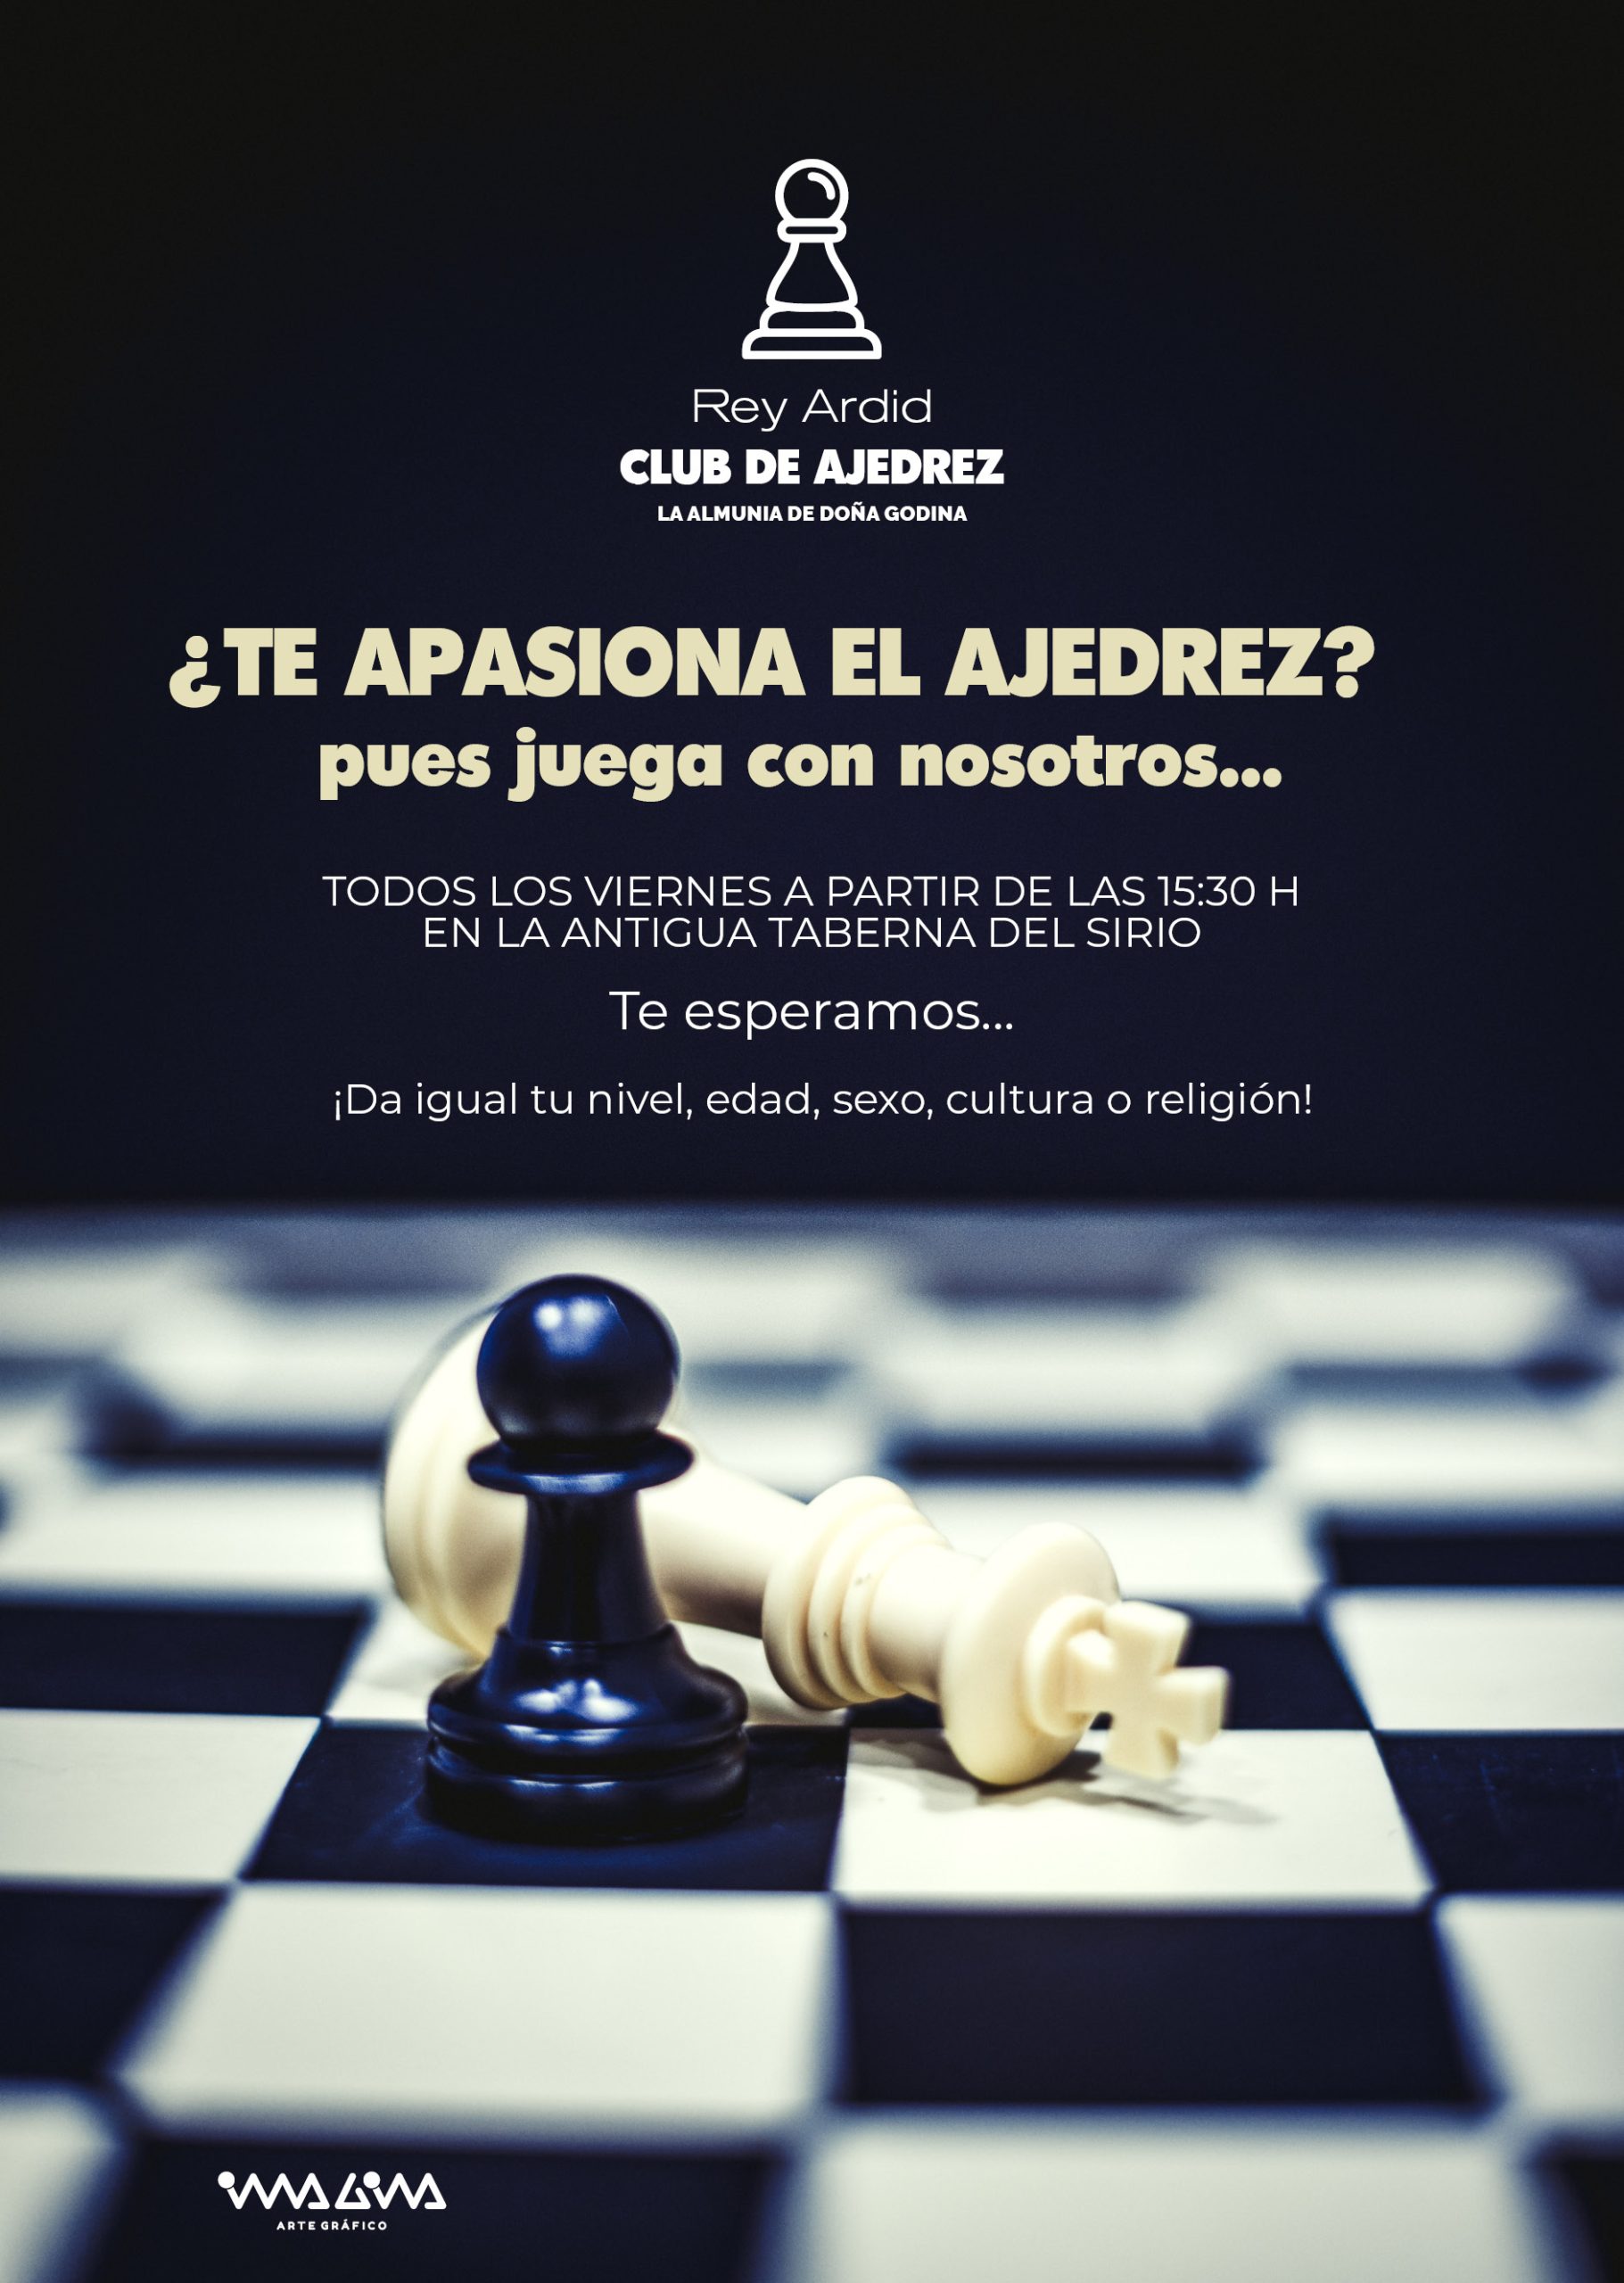 Club de ajedrez La Almunia - Diseño Imagina Arte Gráfico